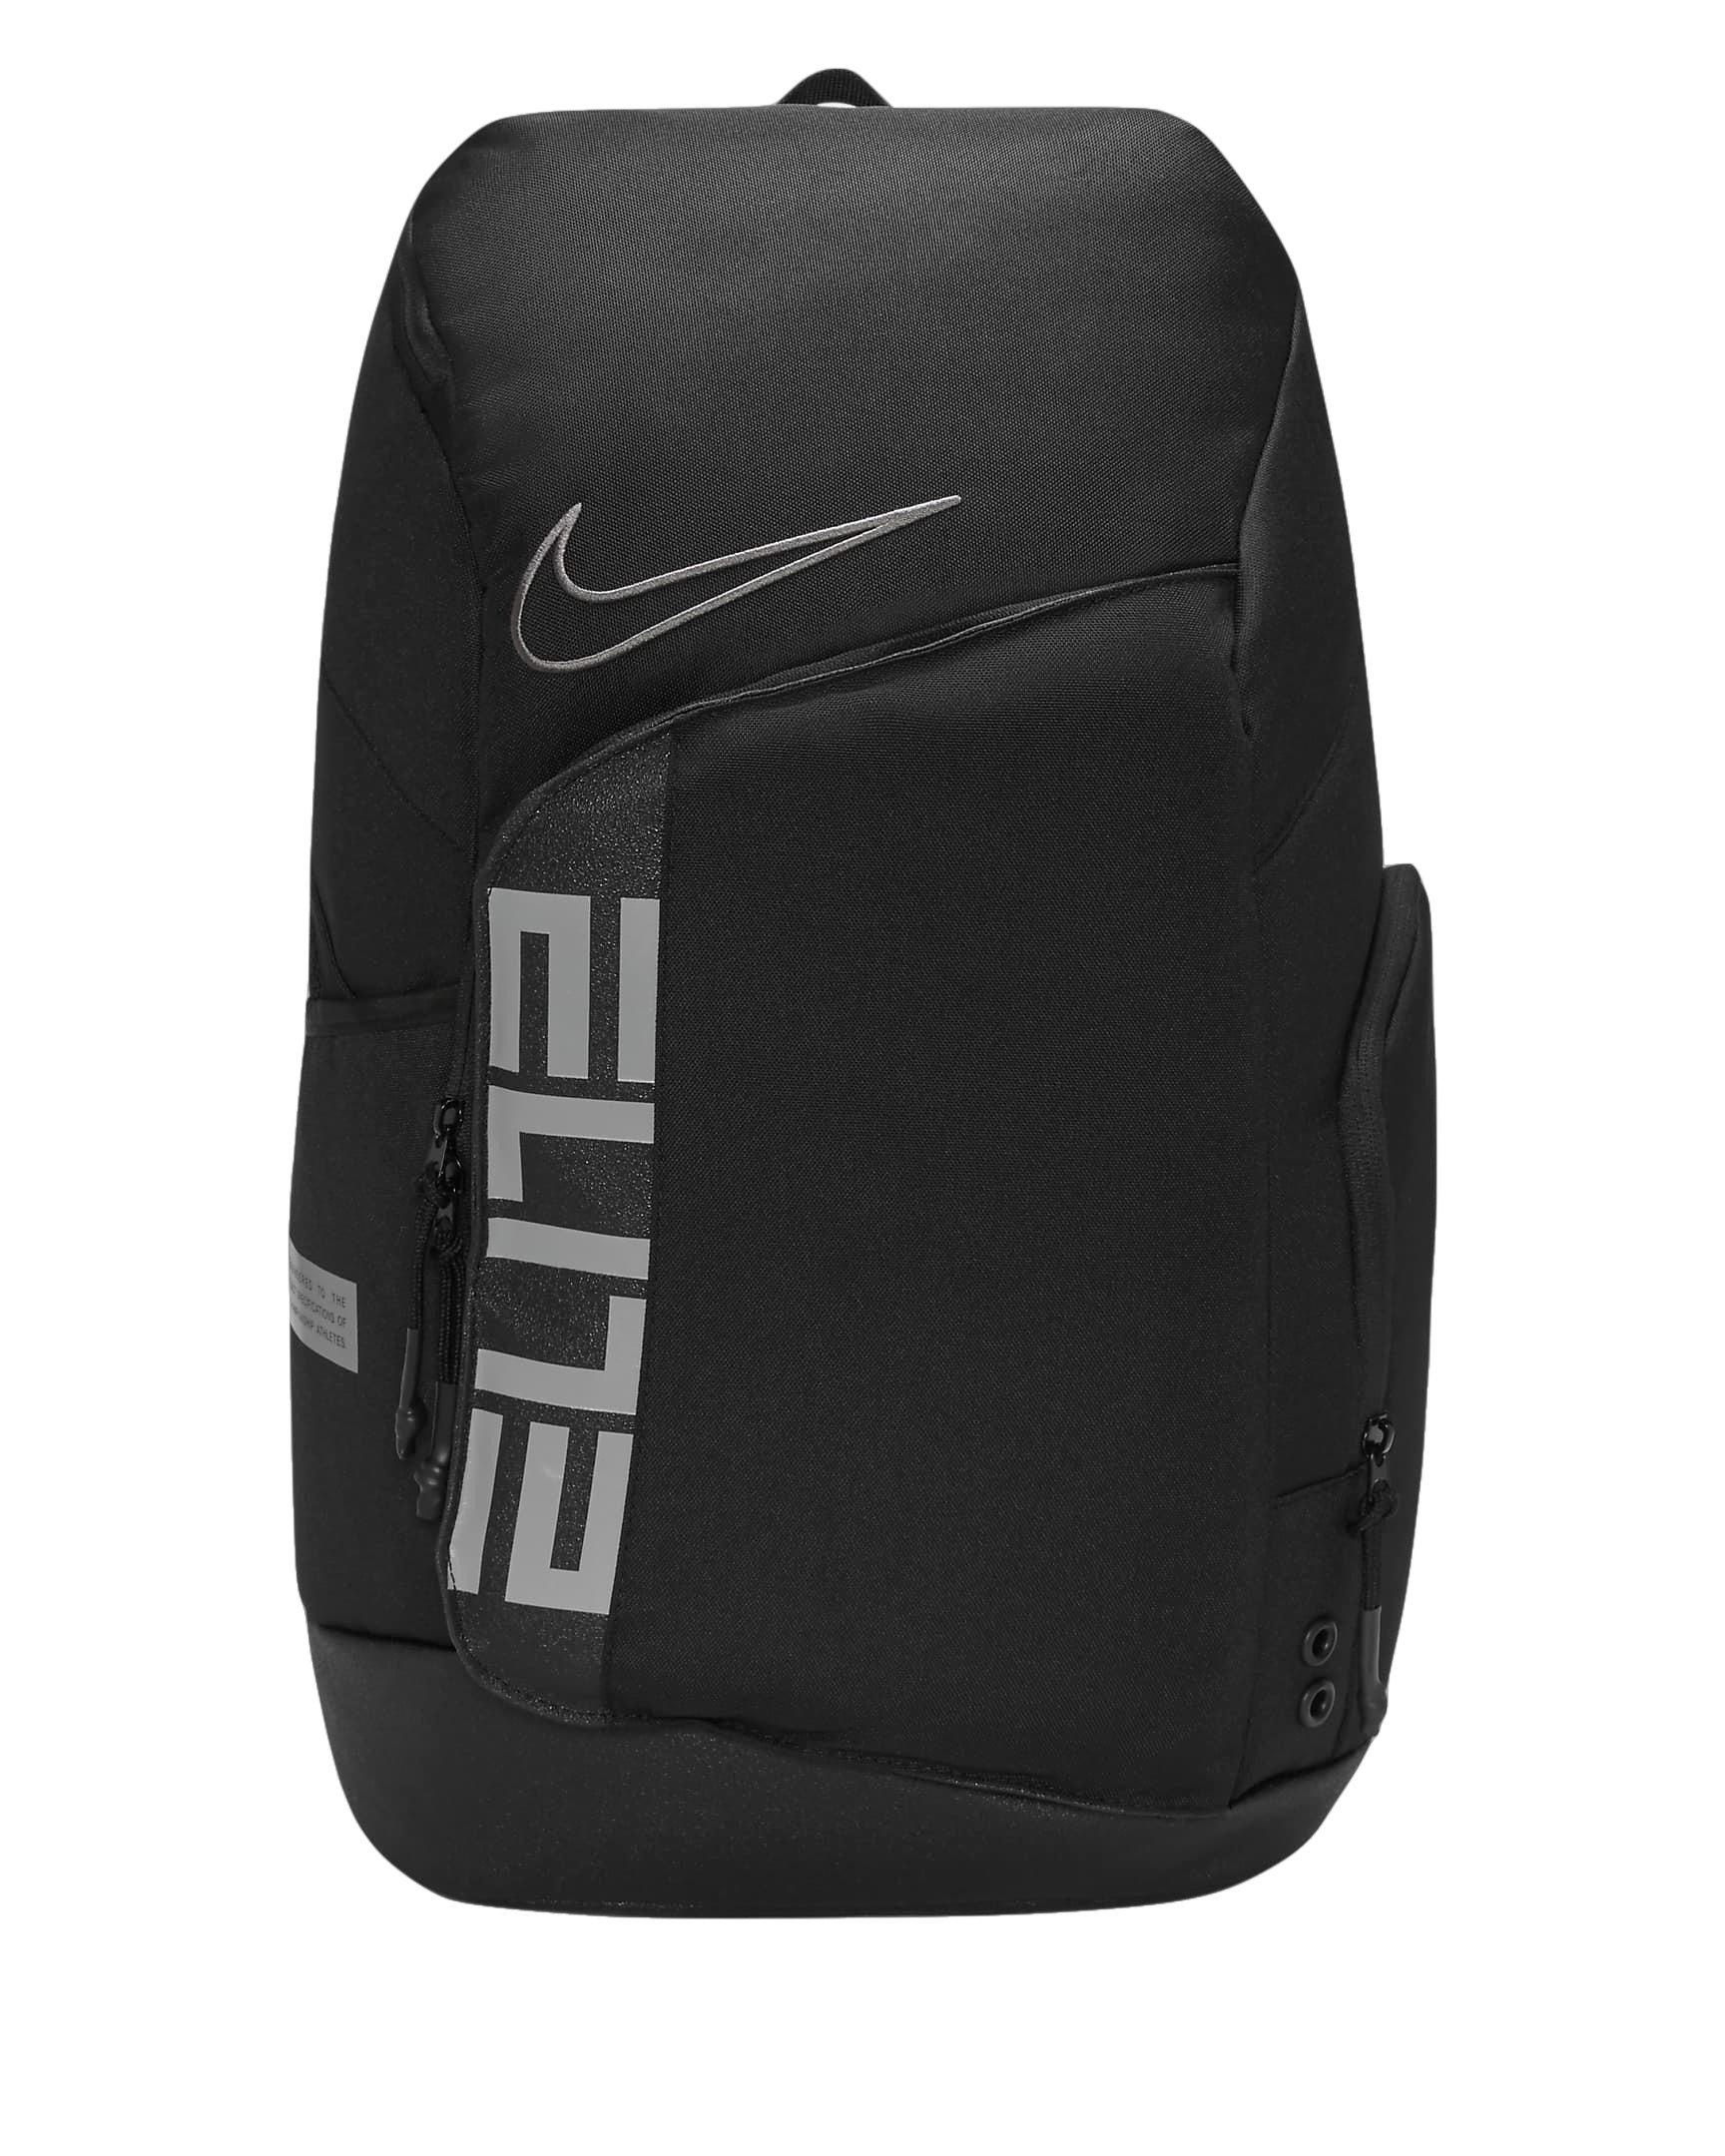 visión Completo gesto Nike Elite Pro 32L Basketball Backpack​